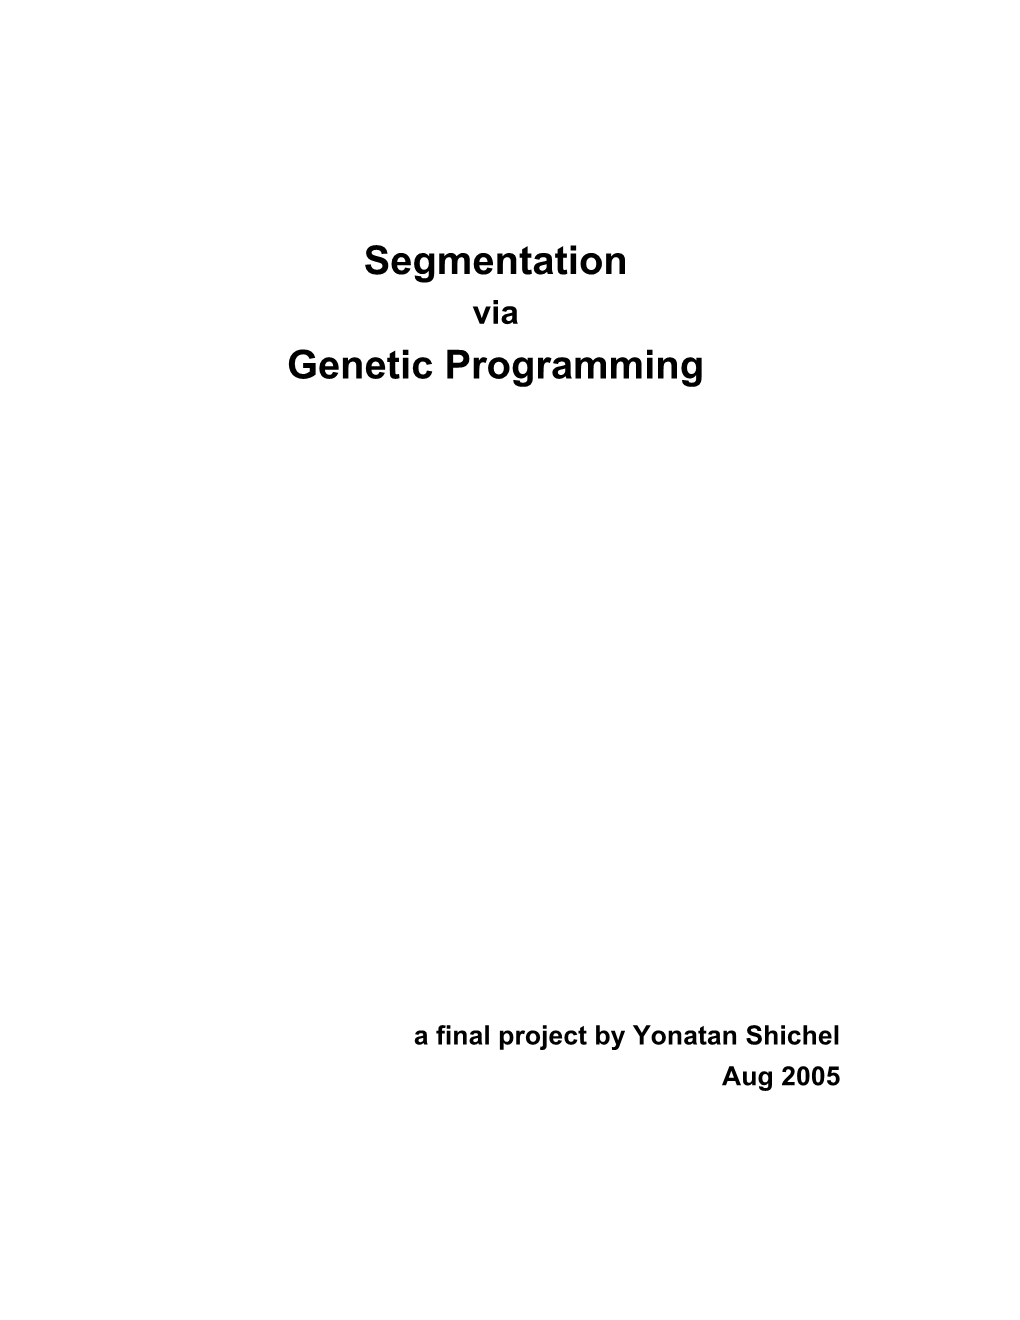 Segmentation Via Genetic Programming